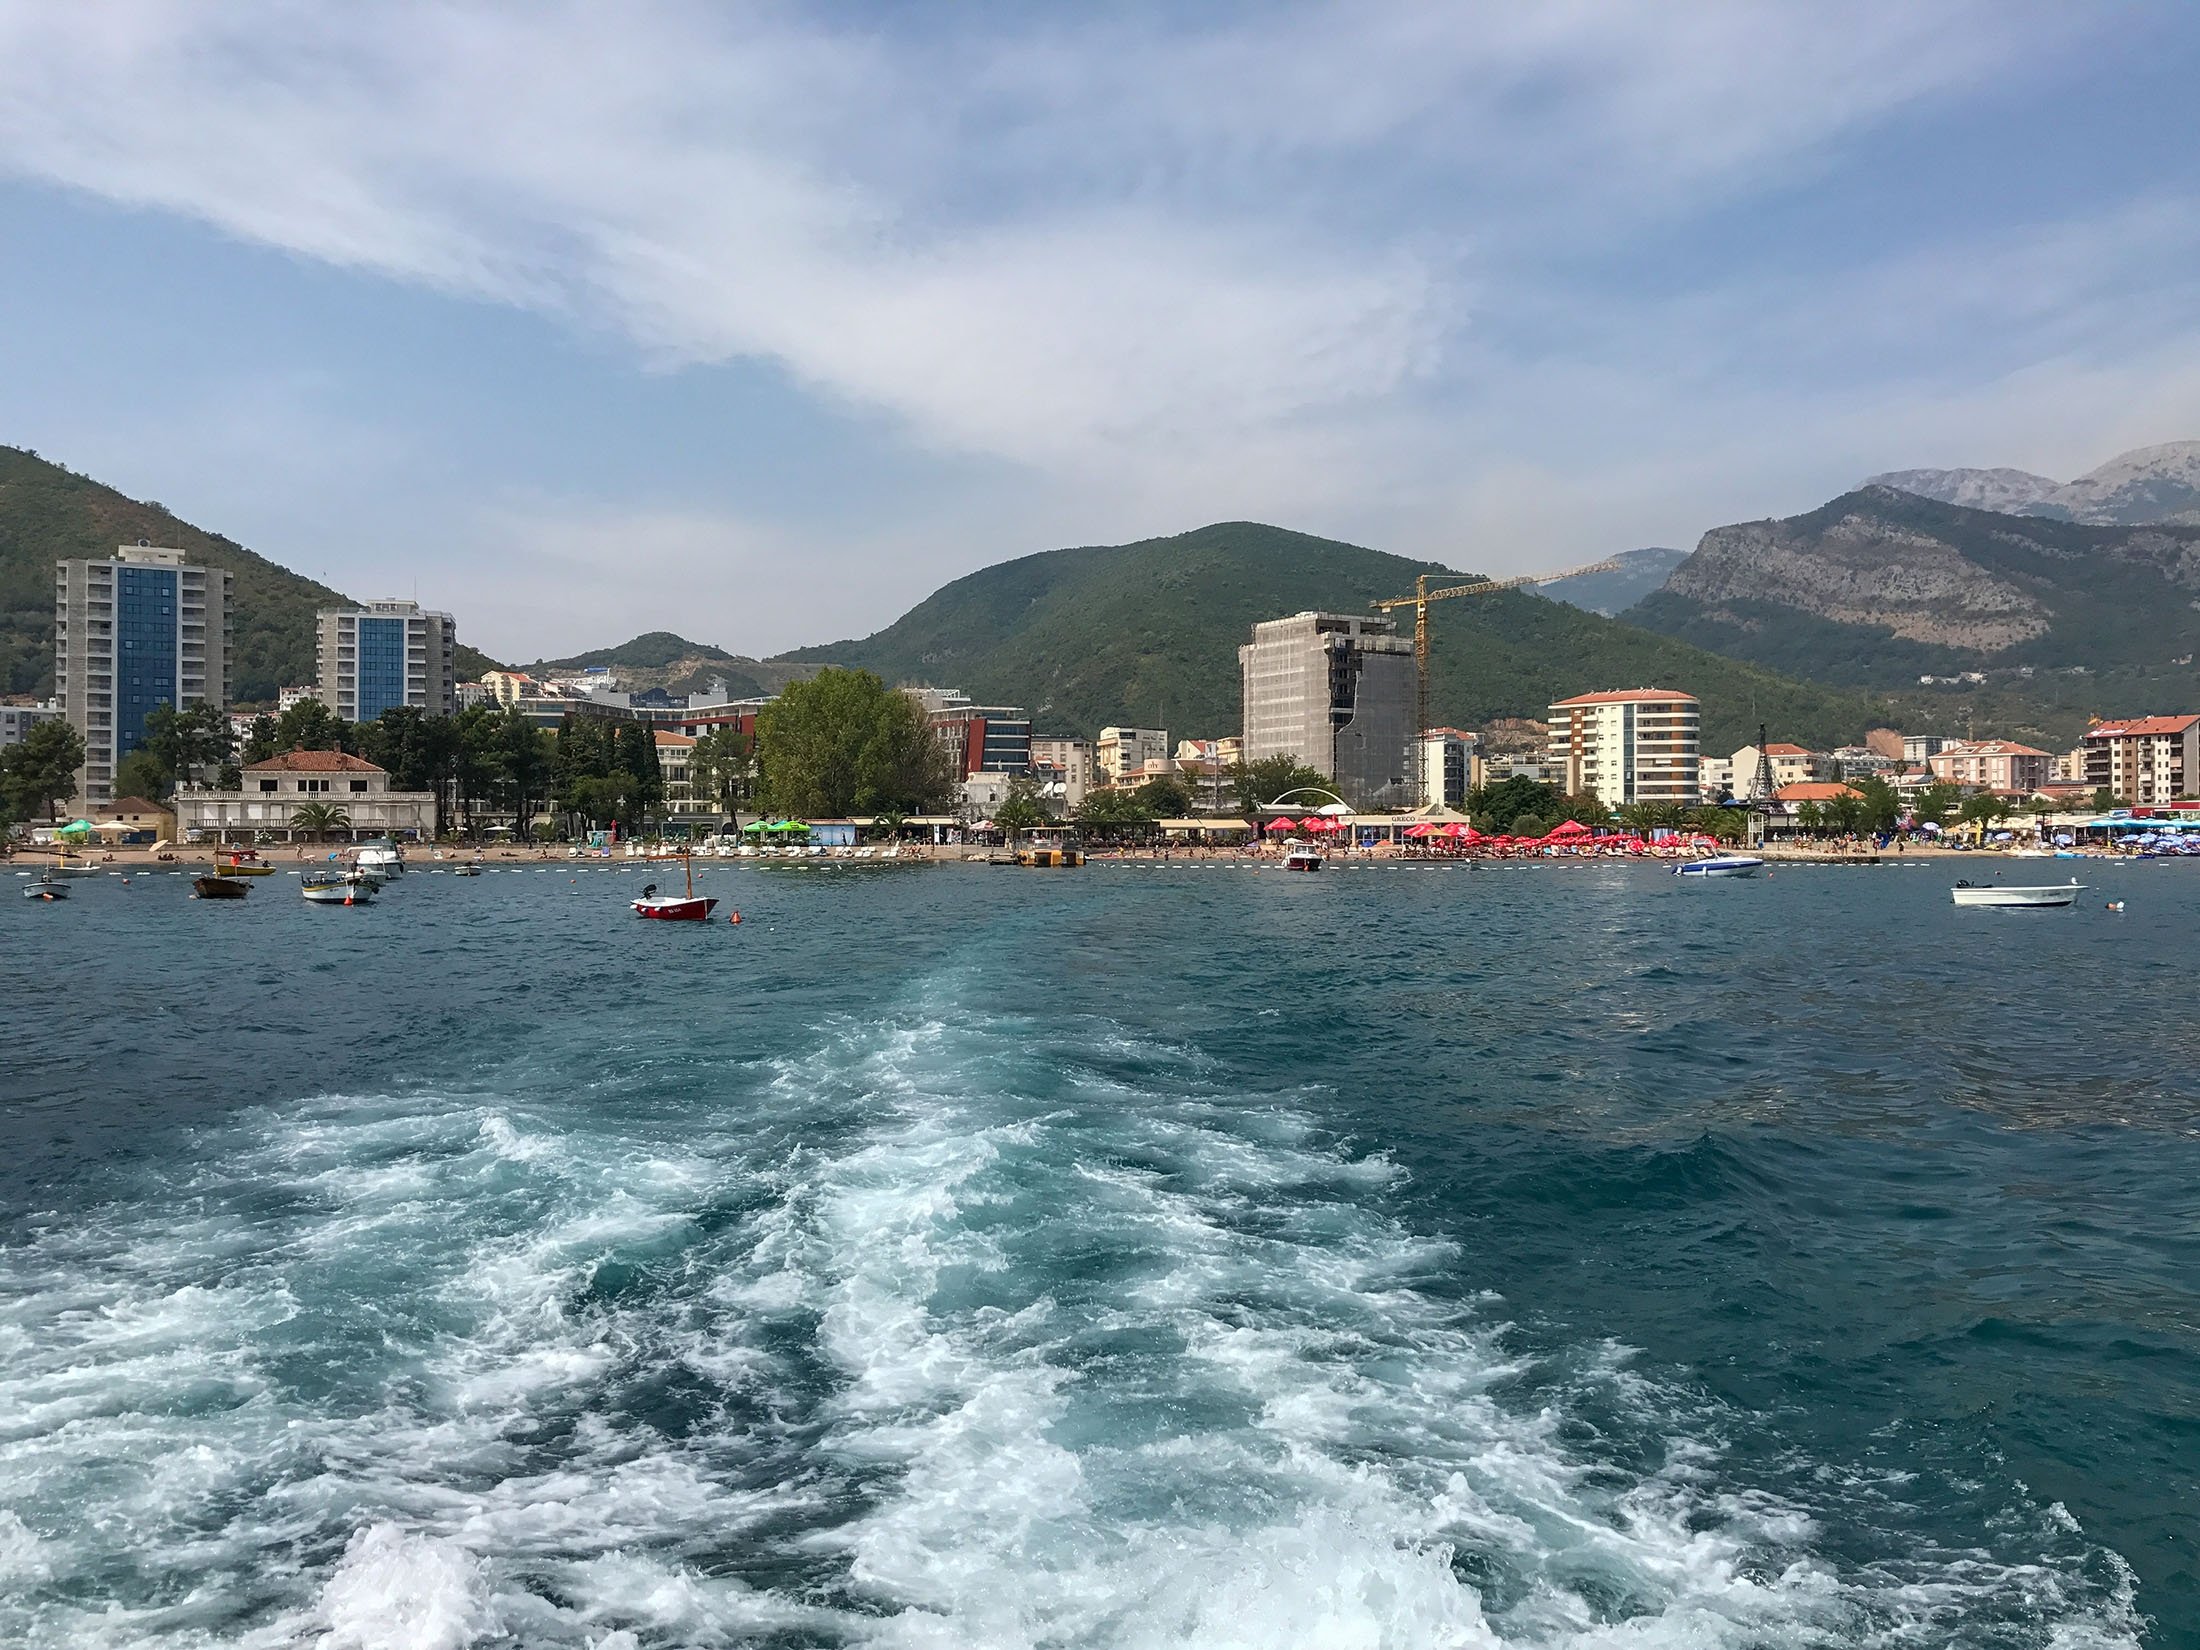 En route to the Sveti Nikola island by boat in Budva, Montenegro. (Photo by Özge Şengelen)